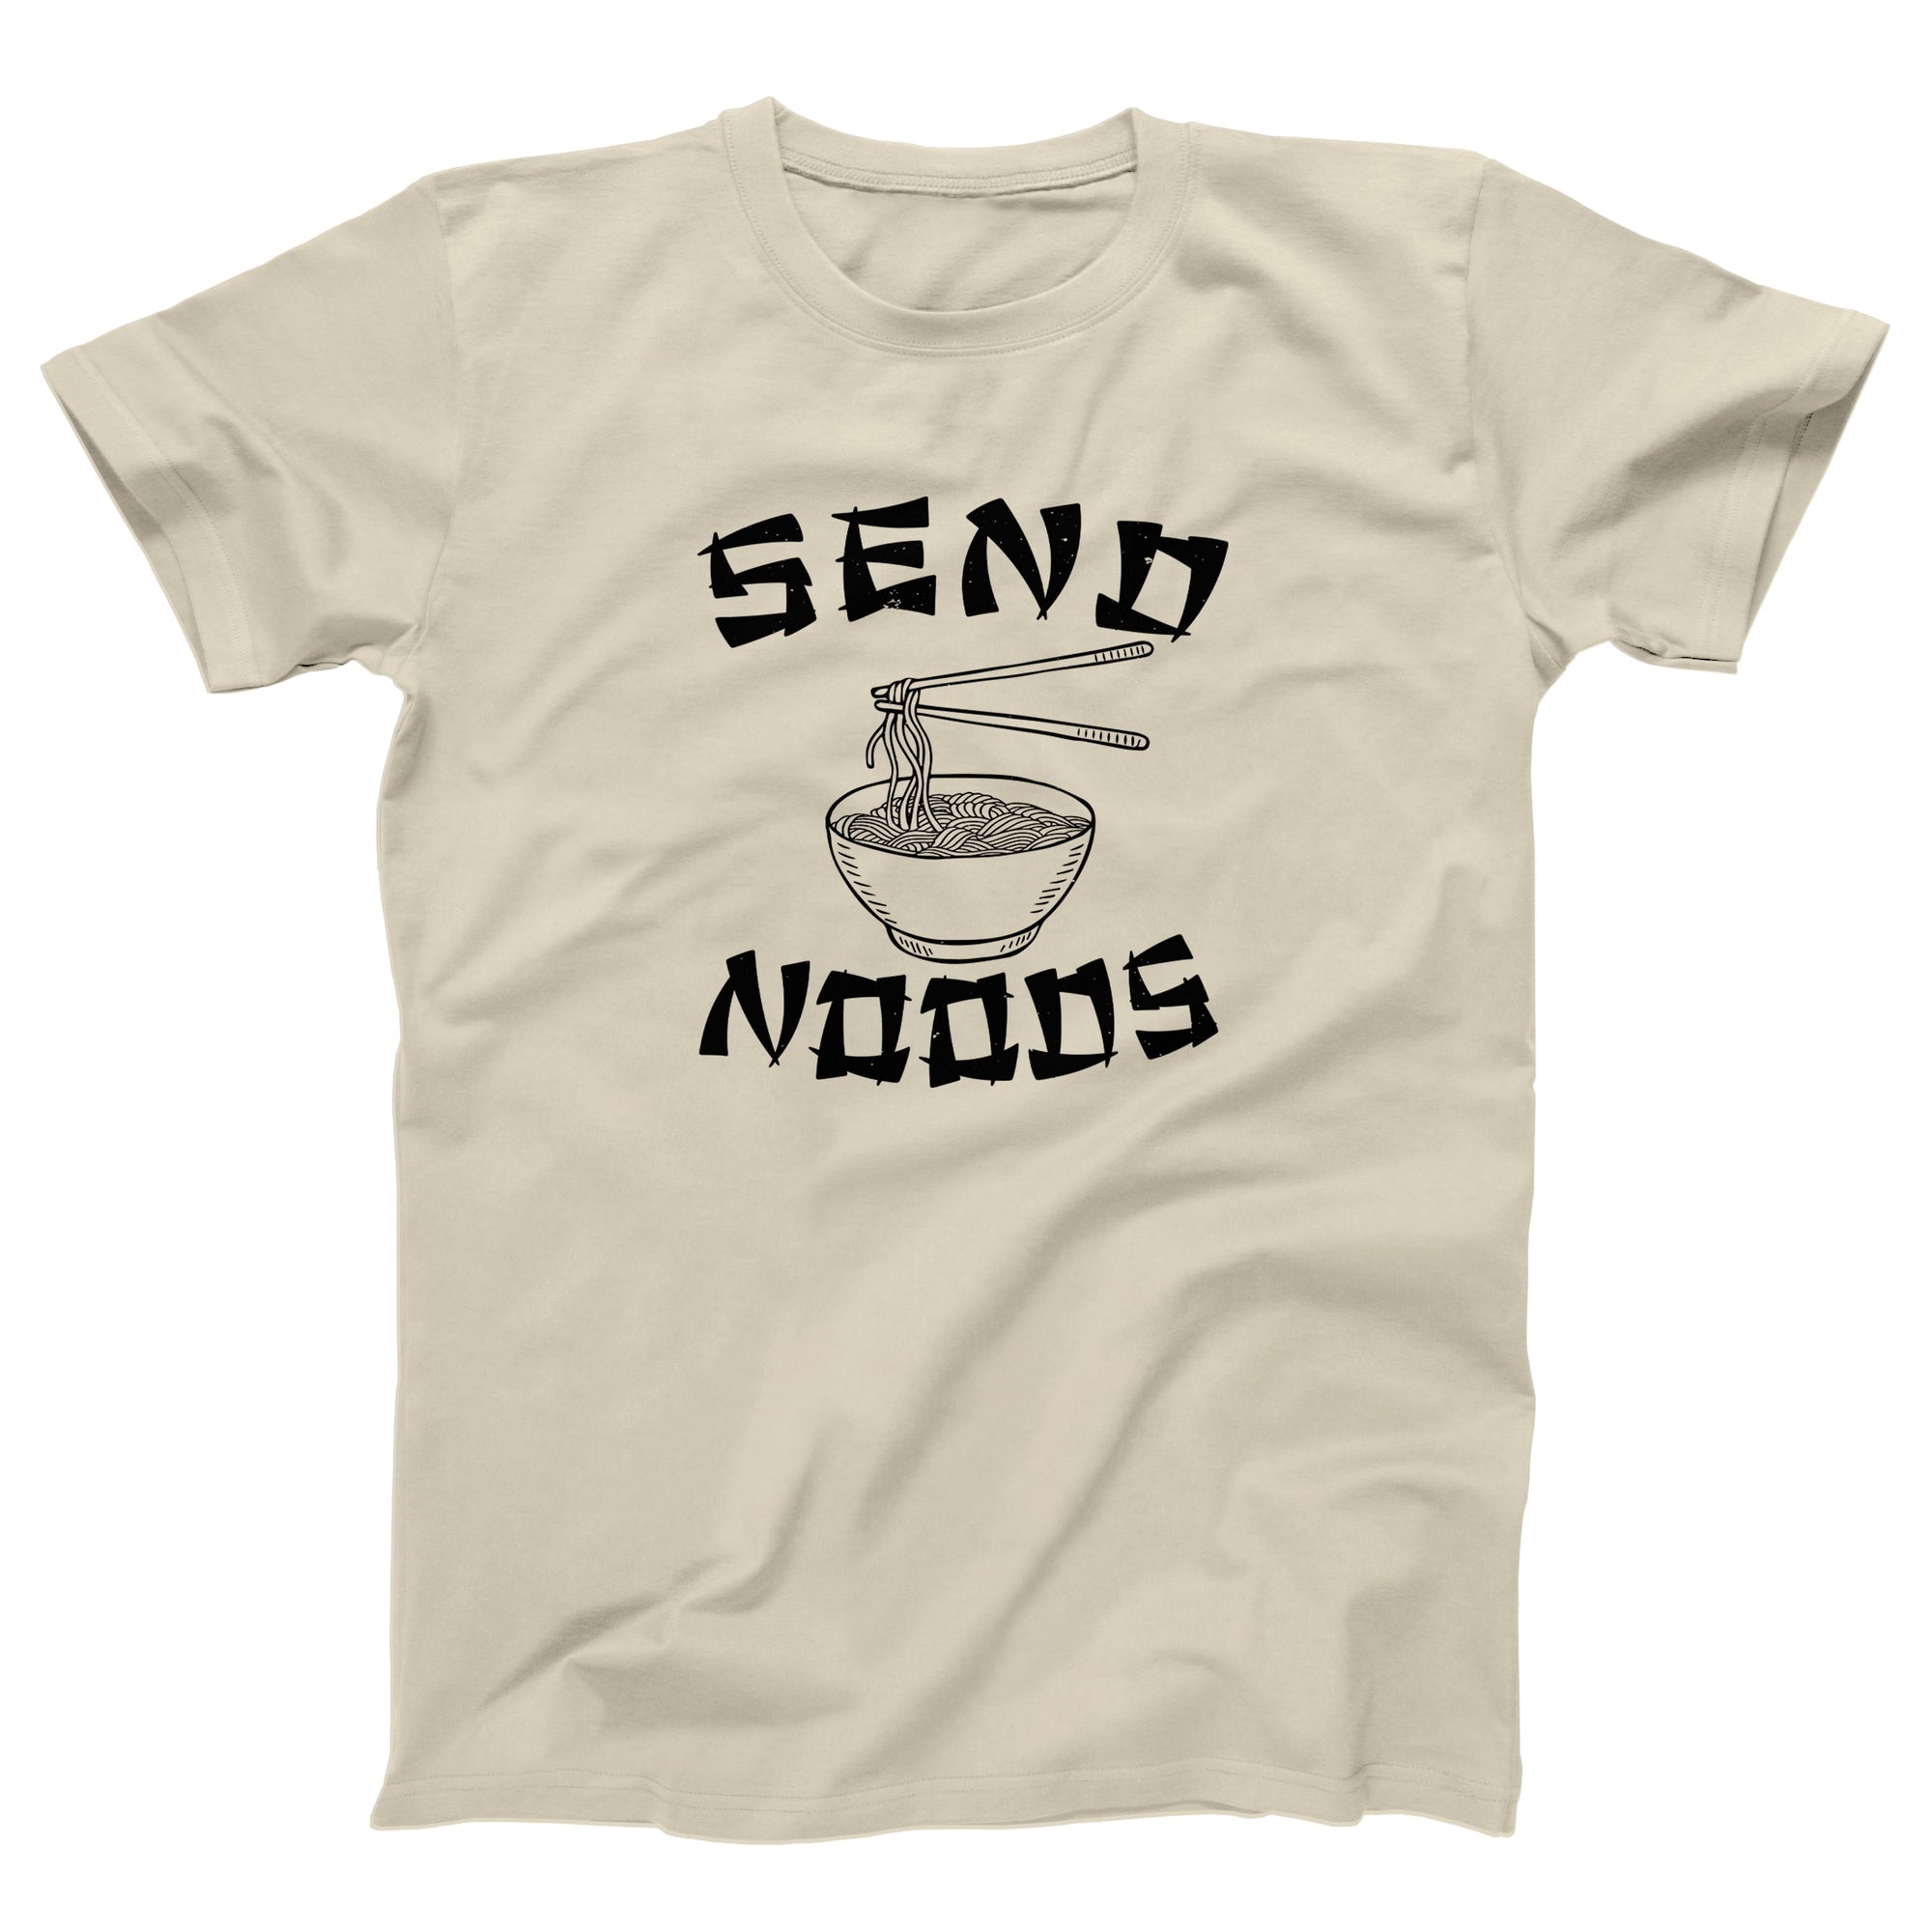 Send Noods Adult Unisex T-Shirt - Twisted Gorilla